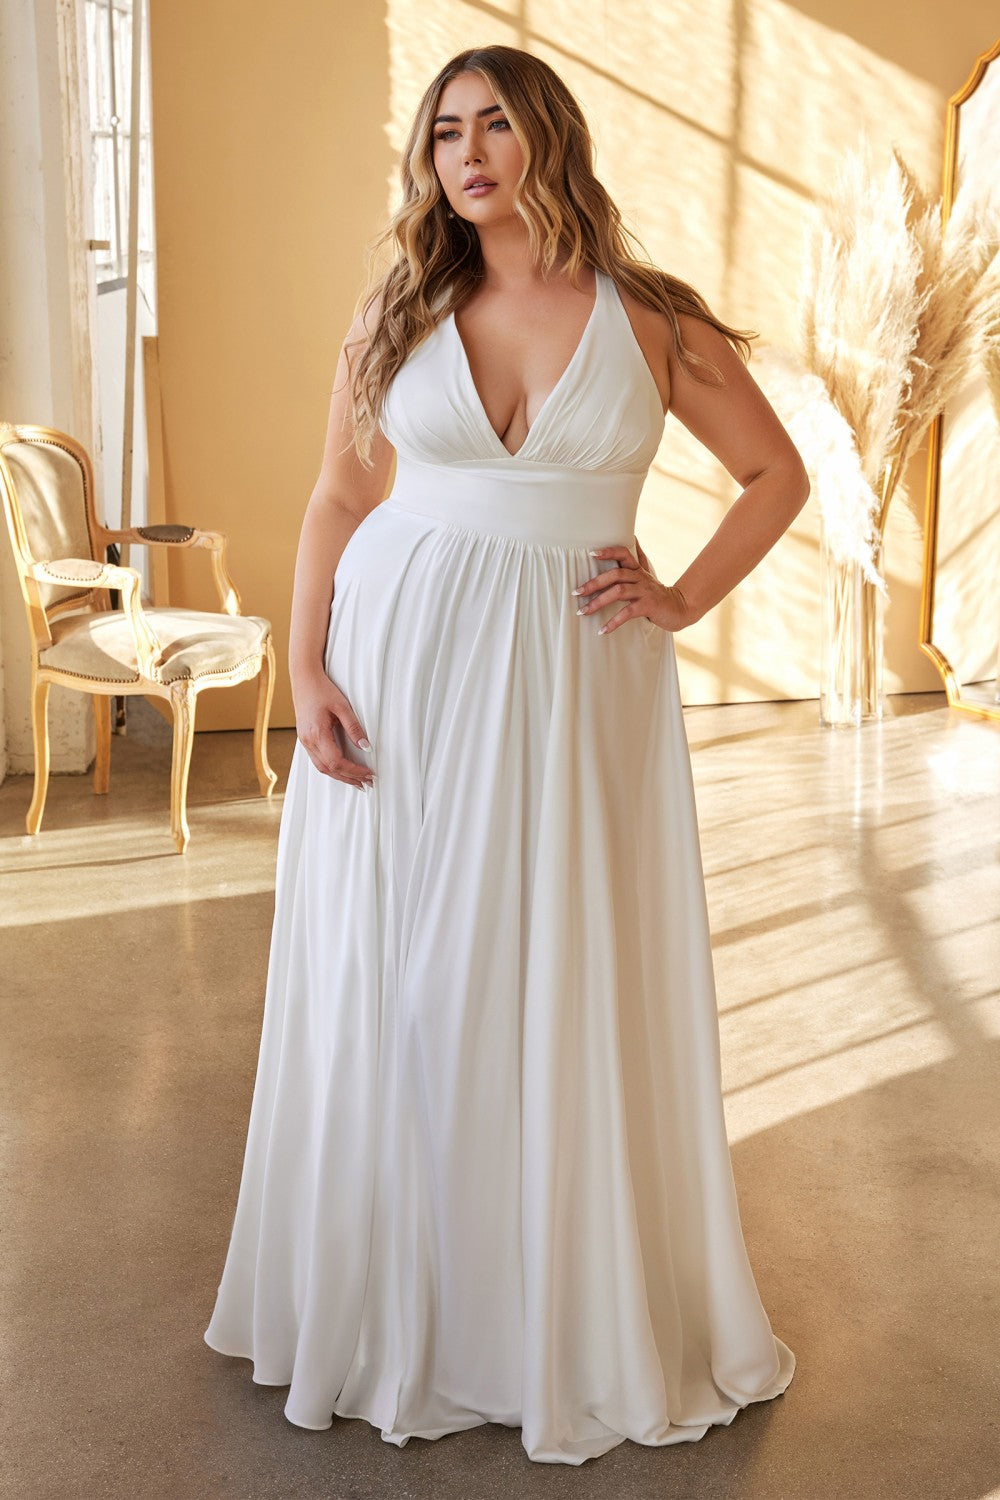 Plus Size White Satin V-Neck Gown by Cinderella Divine -7469WW